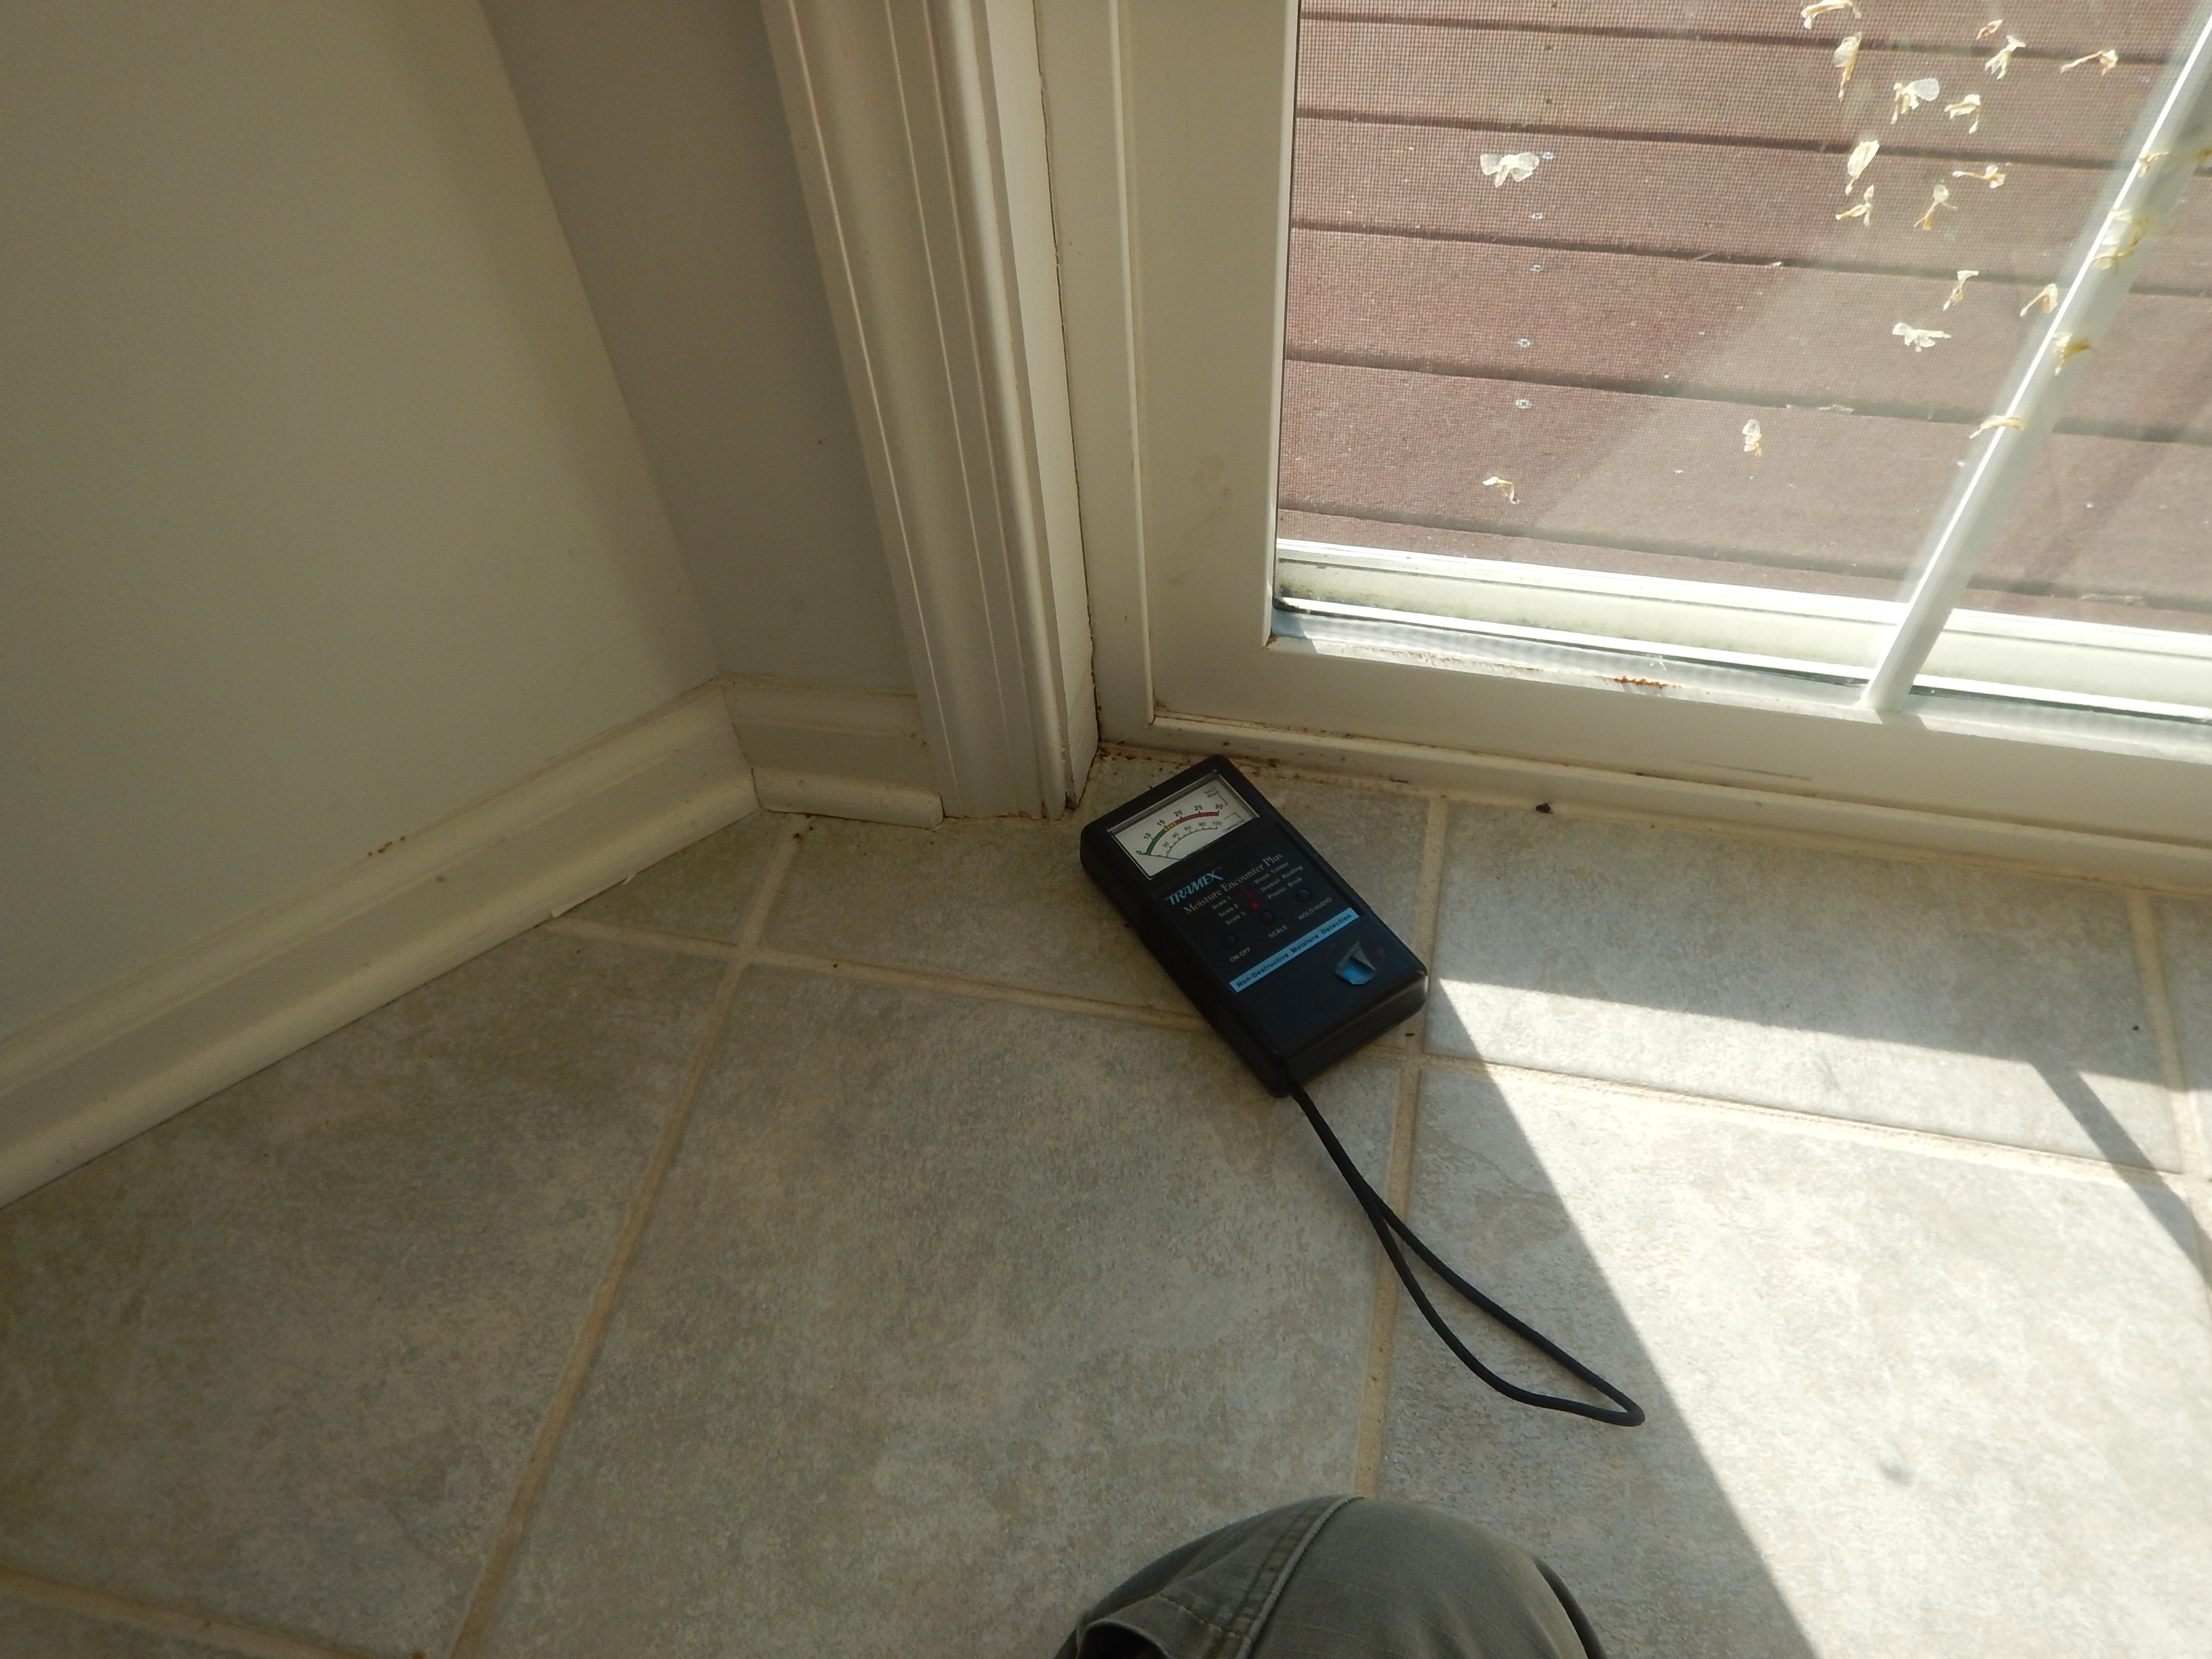 Moisture Meter Used Around All Doors and Windows